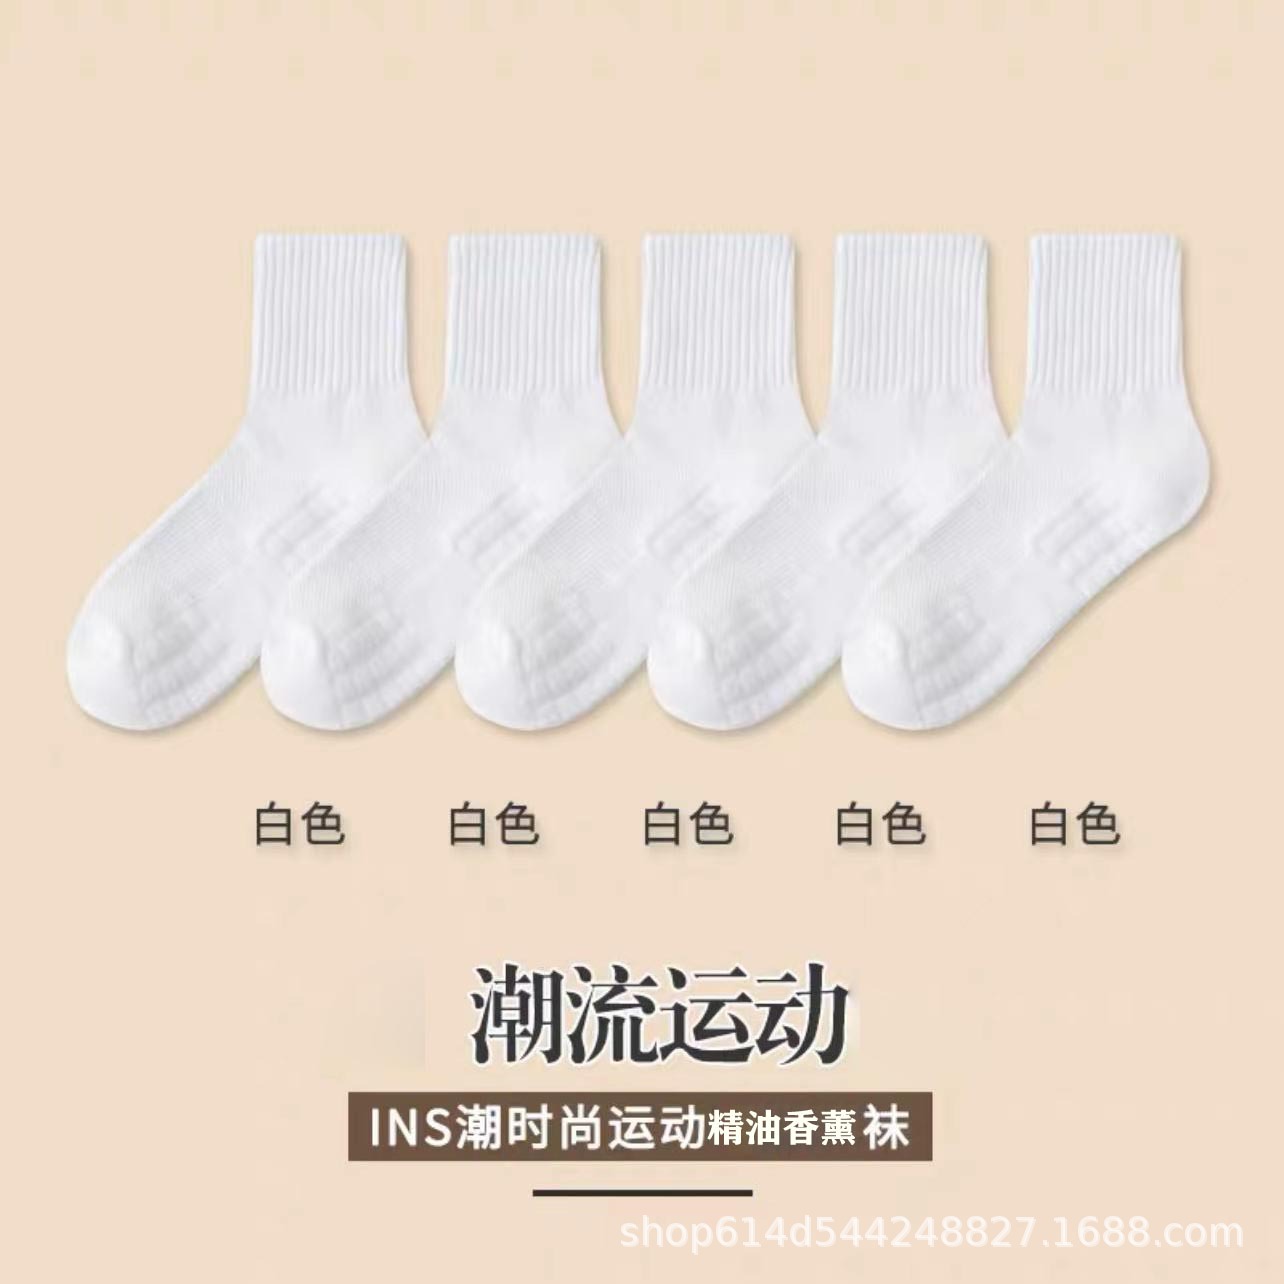 Thin Microencapsulated Gulong Essential Oil Socks Deodorant Breathable Sweat-Absorbent Summer Shock-Absorbing Sports Socks Towel Bottom Socks